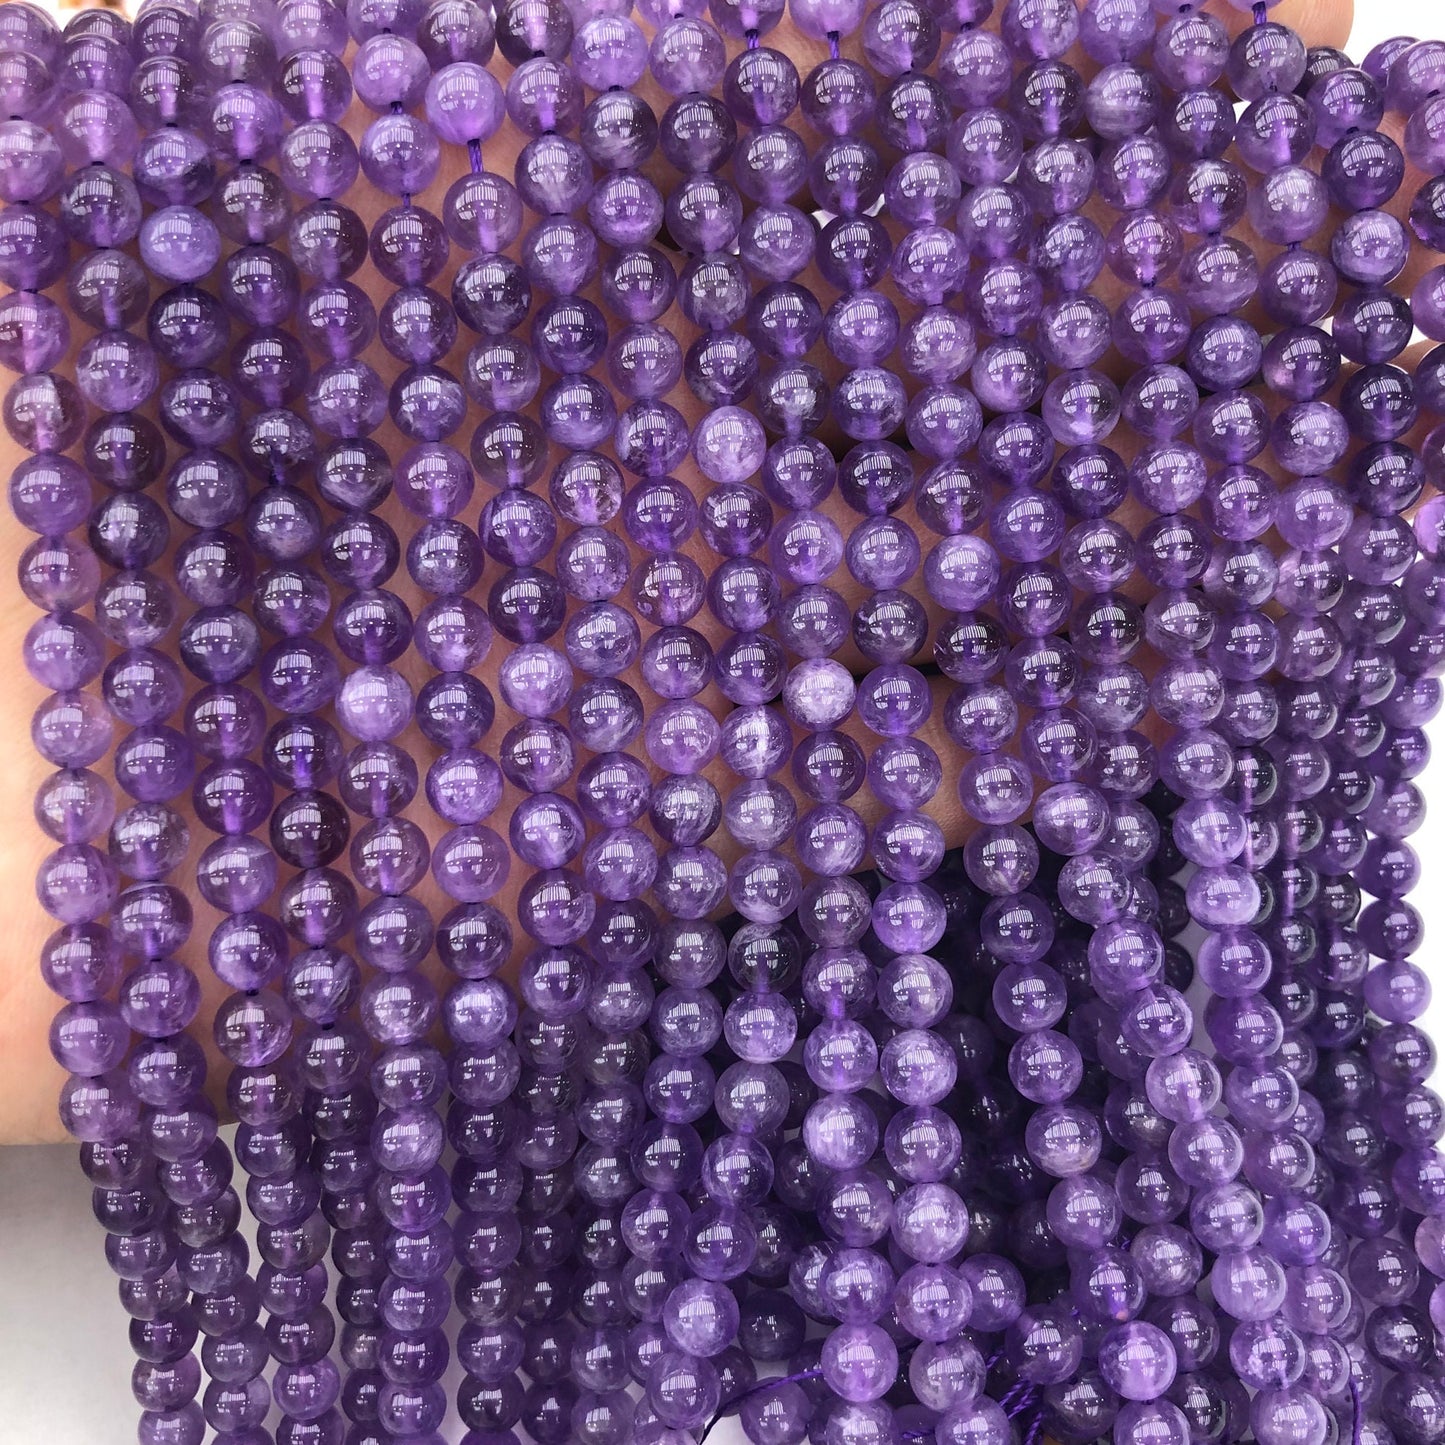 Light Purple Amethyst  Natural Gemstone Beads 6mm 15''